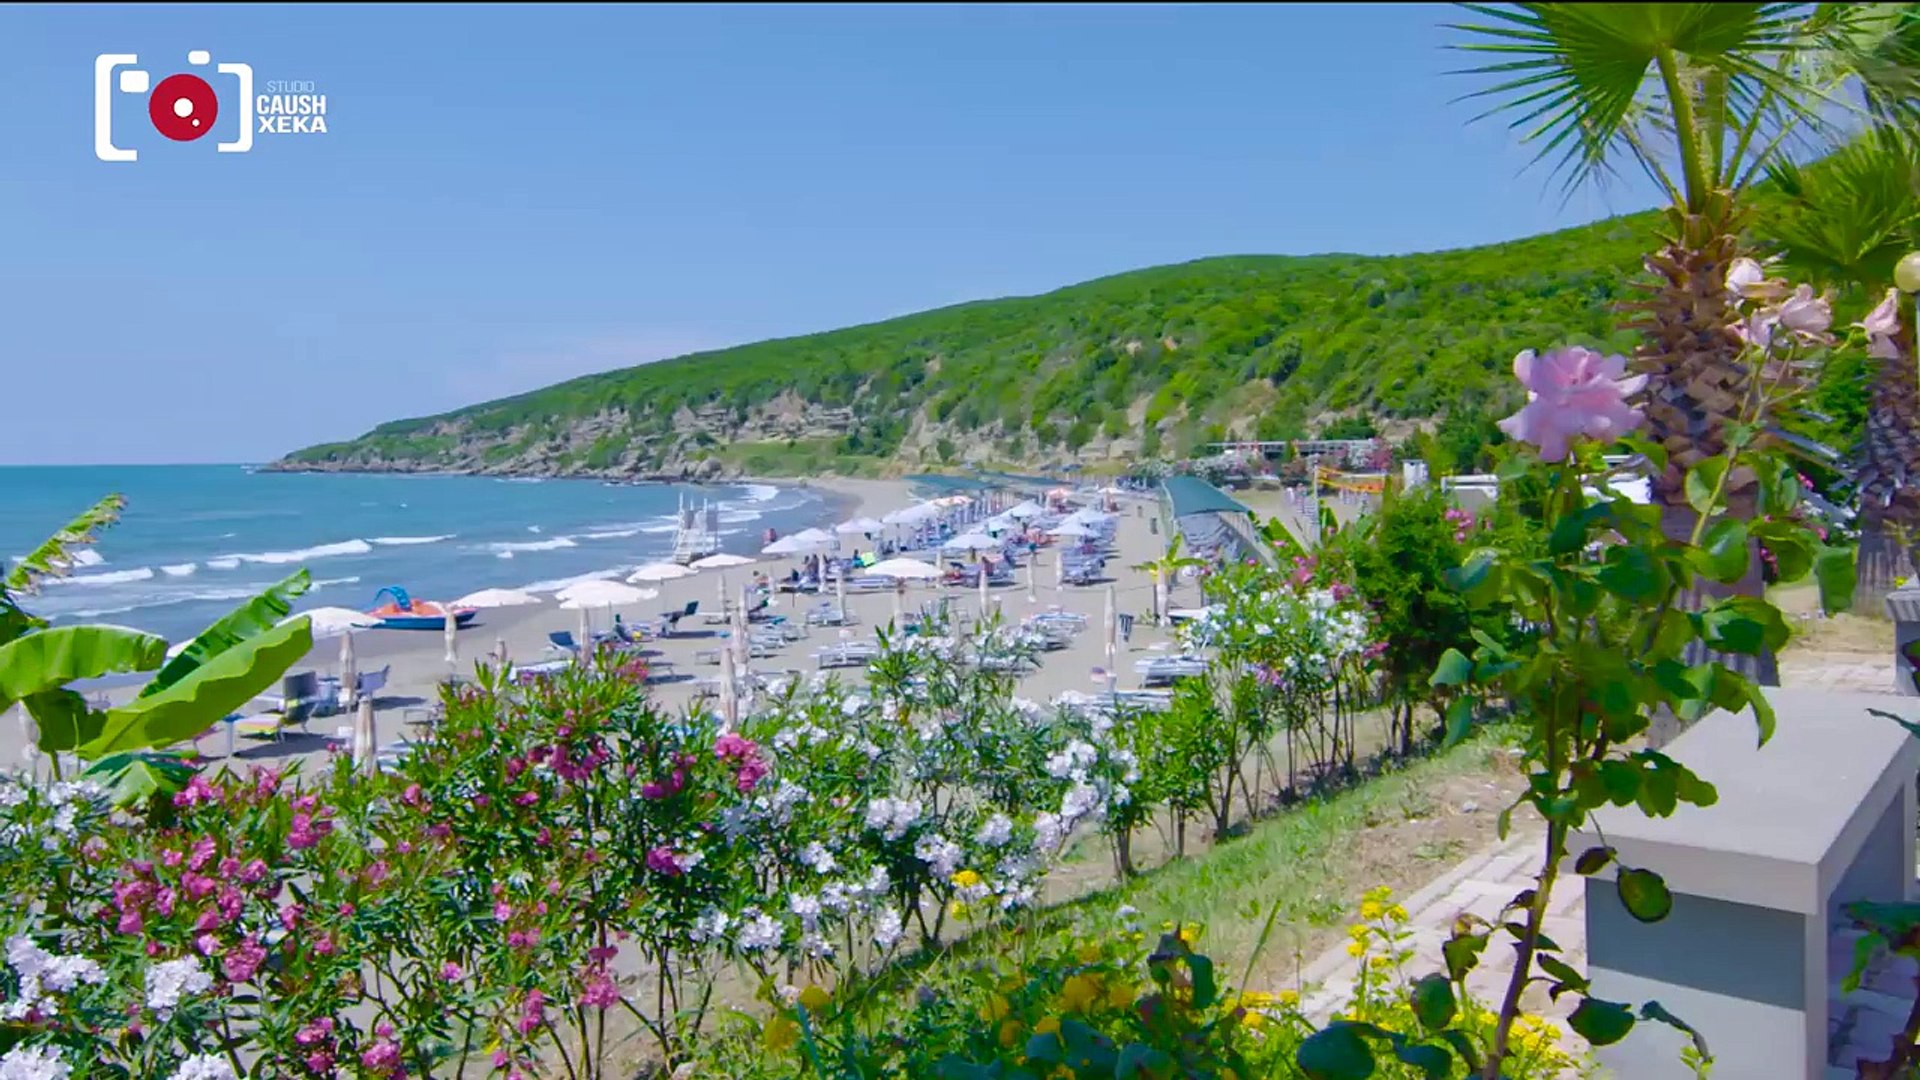 Plazhi i Gjeneralit - The General Beach, Kavaje District, Albania - video  Dailymotion